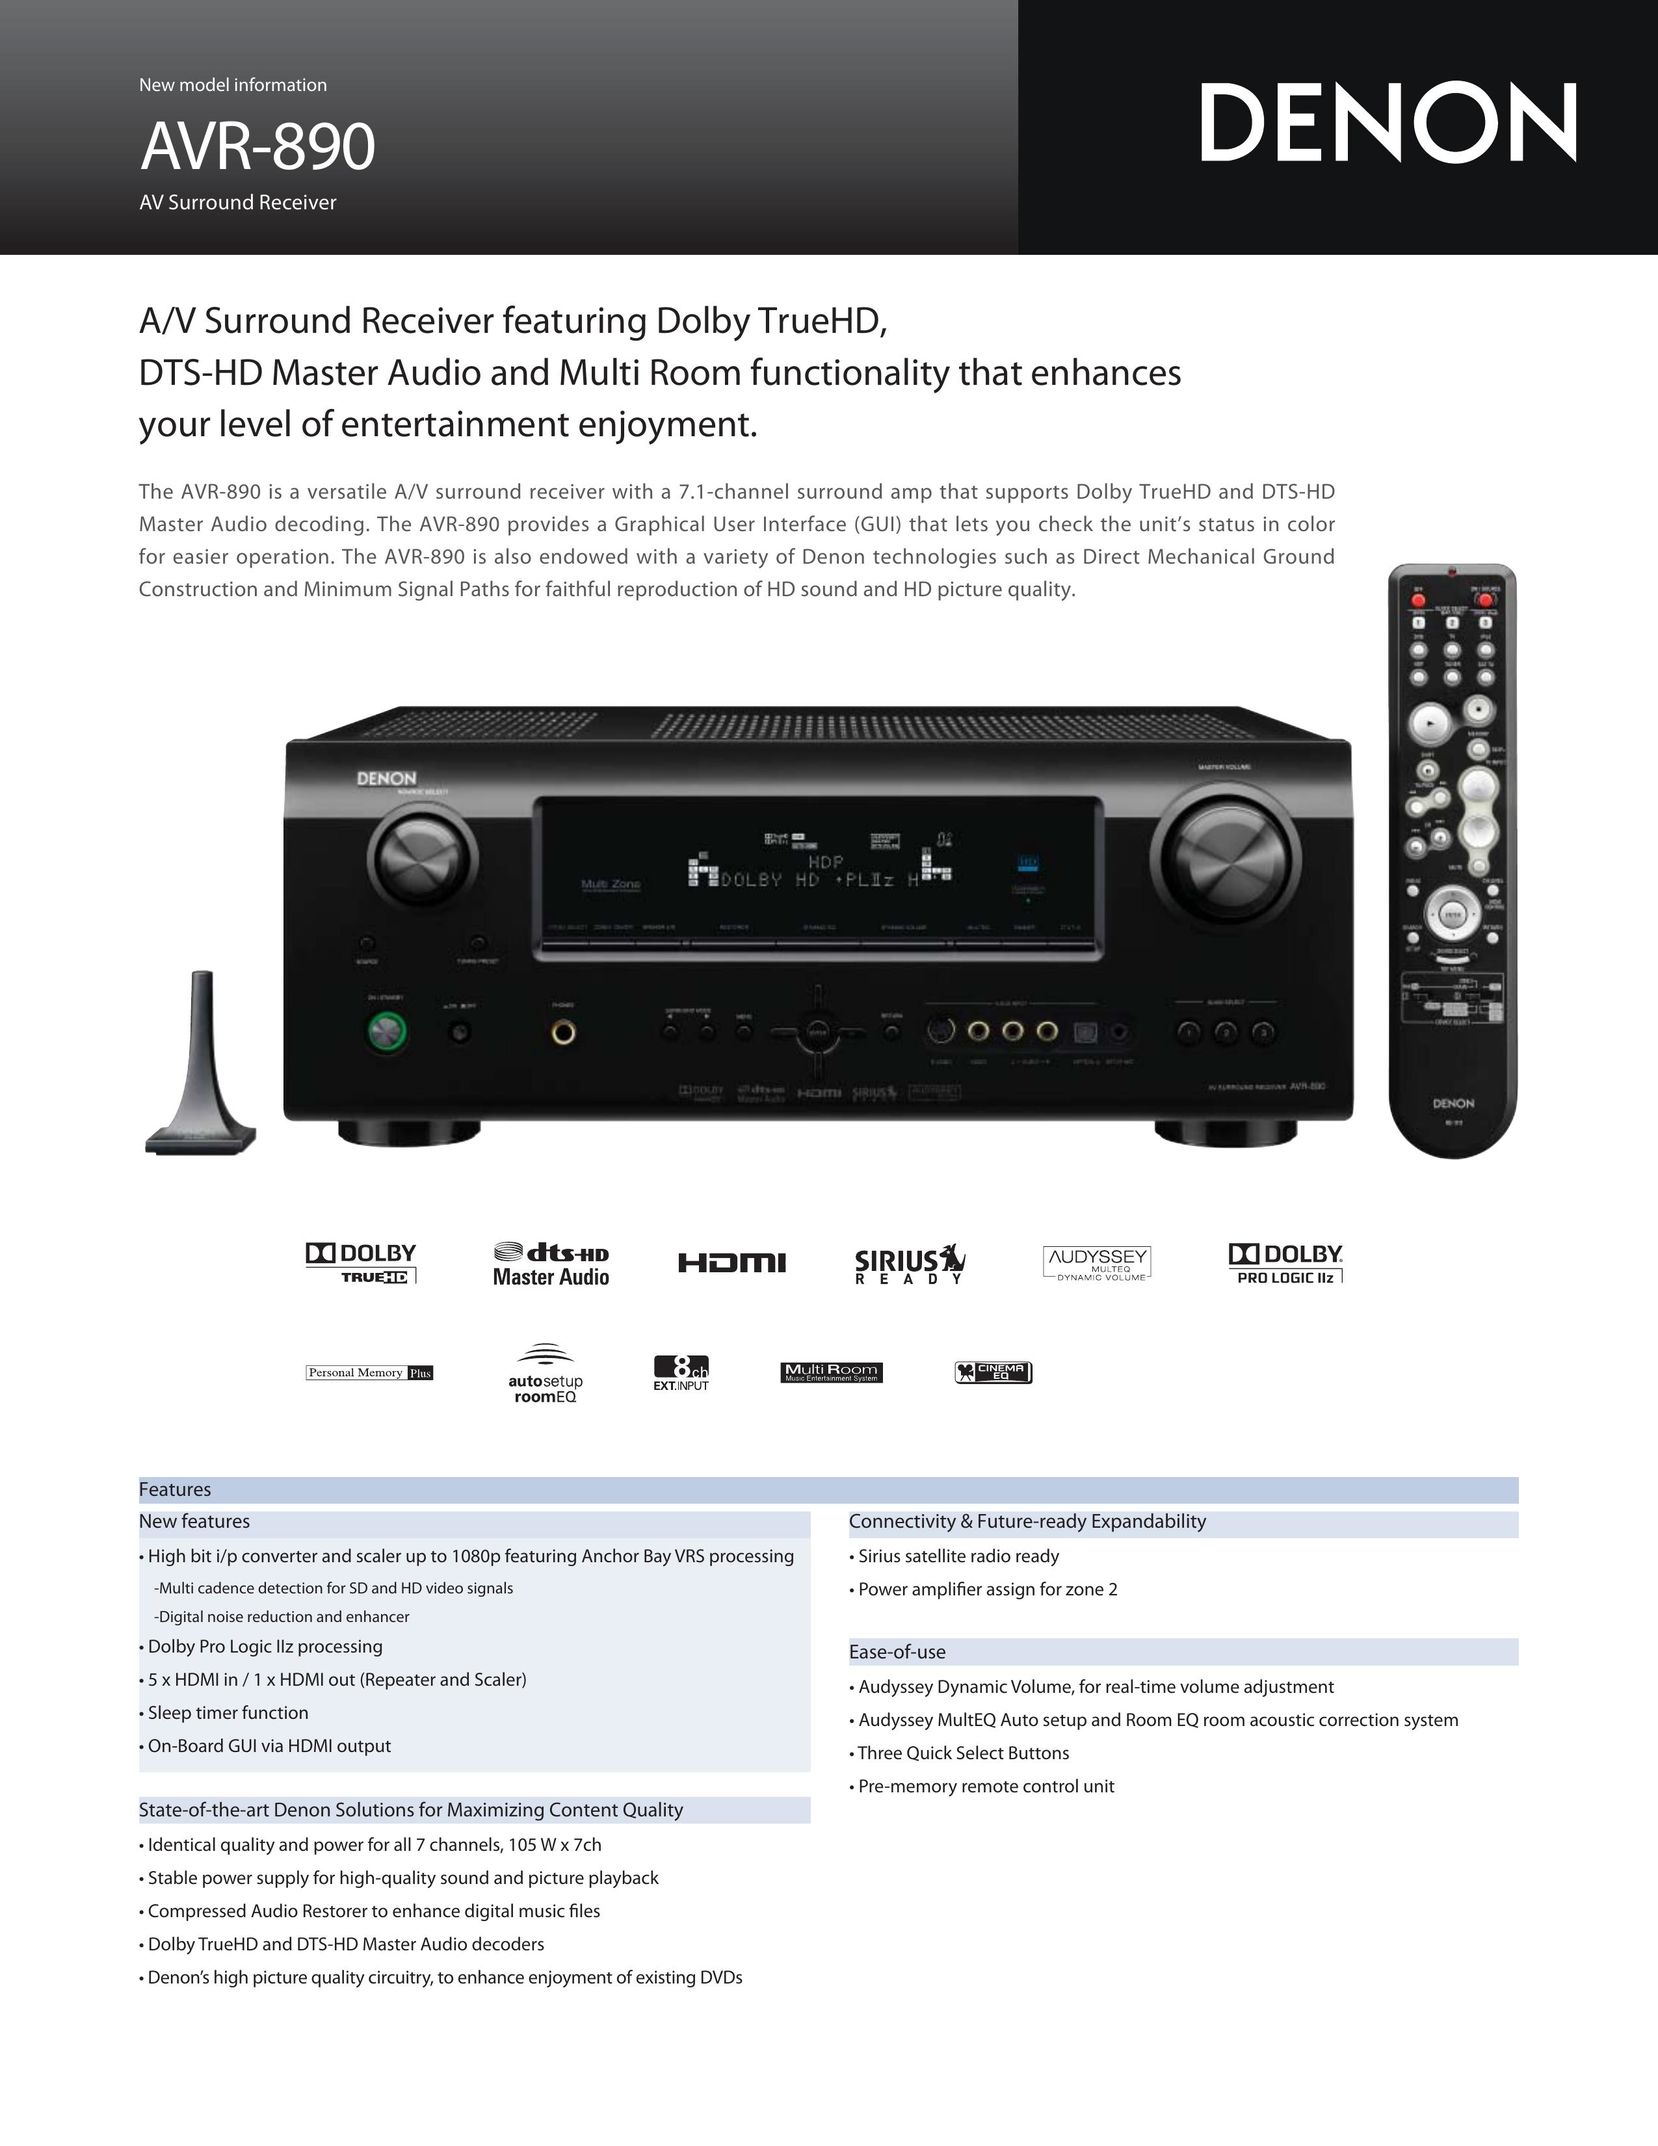 Denon AV Surround Receiver Home Theater System User Manual